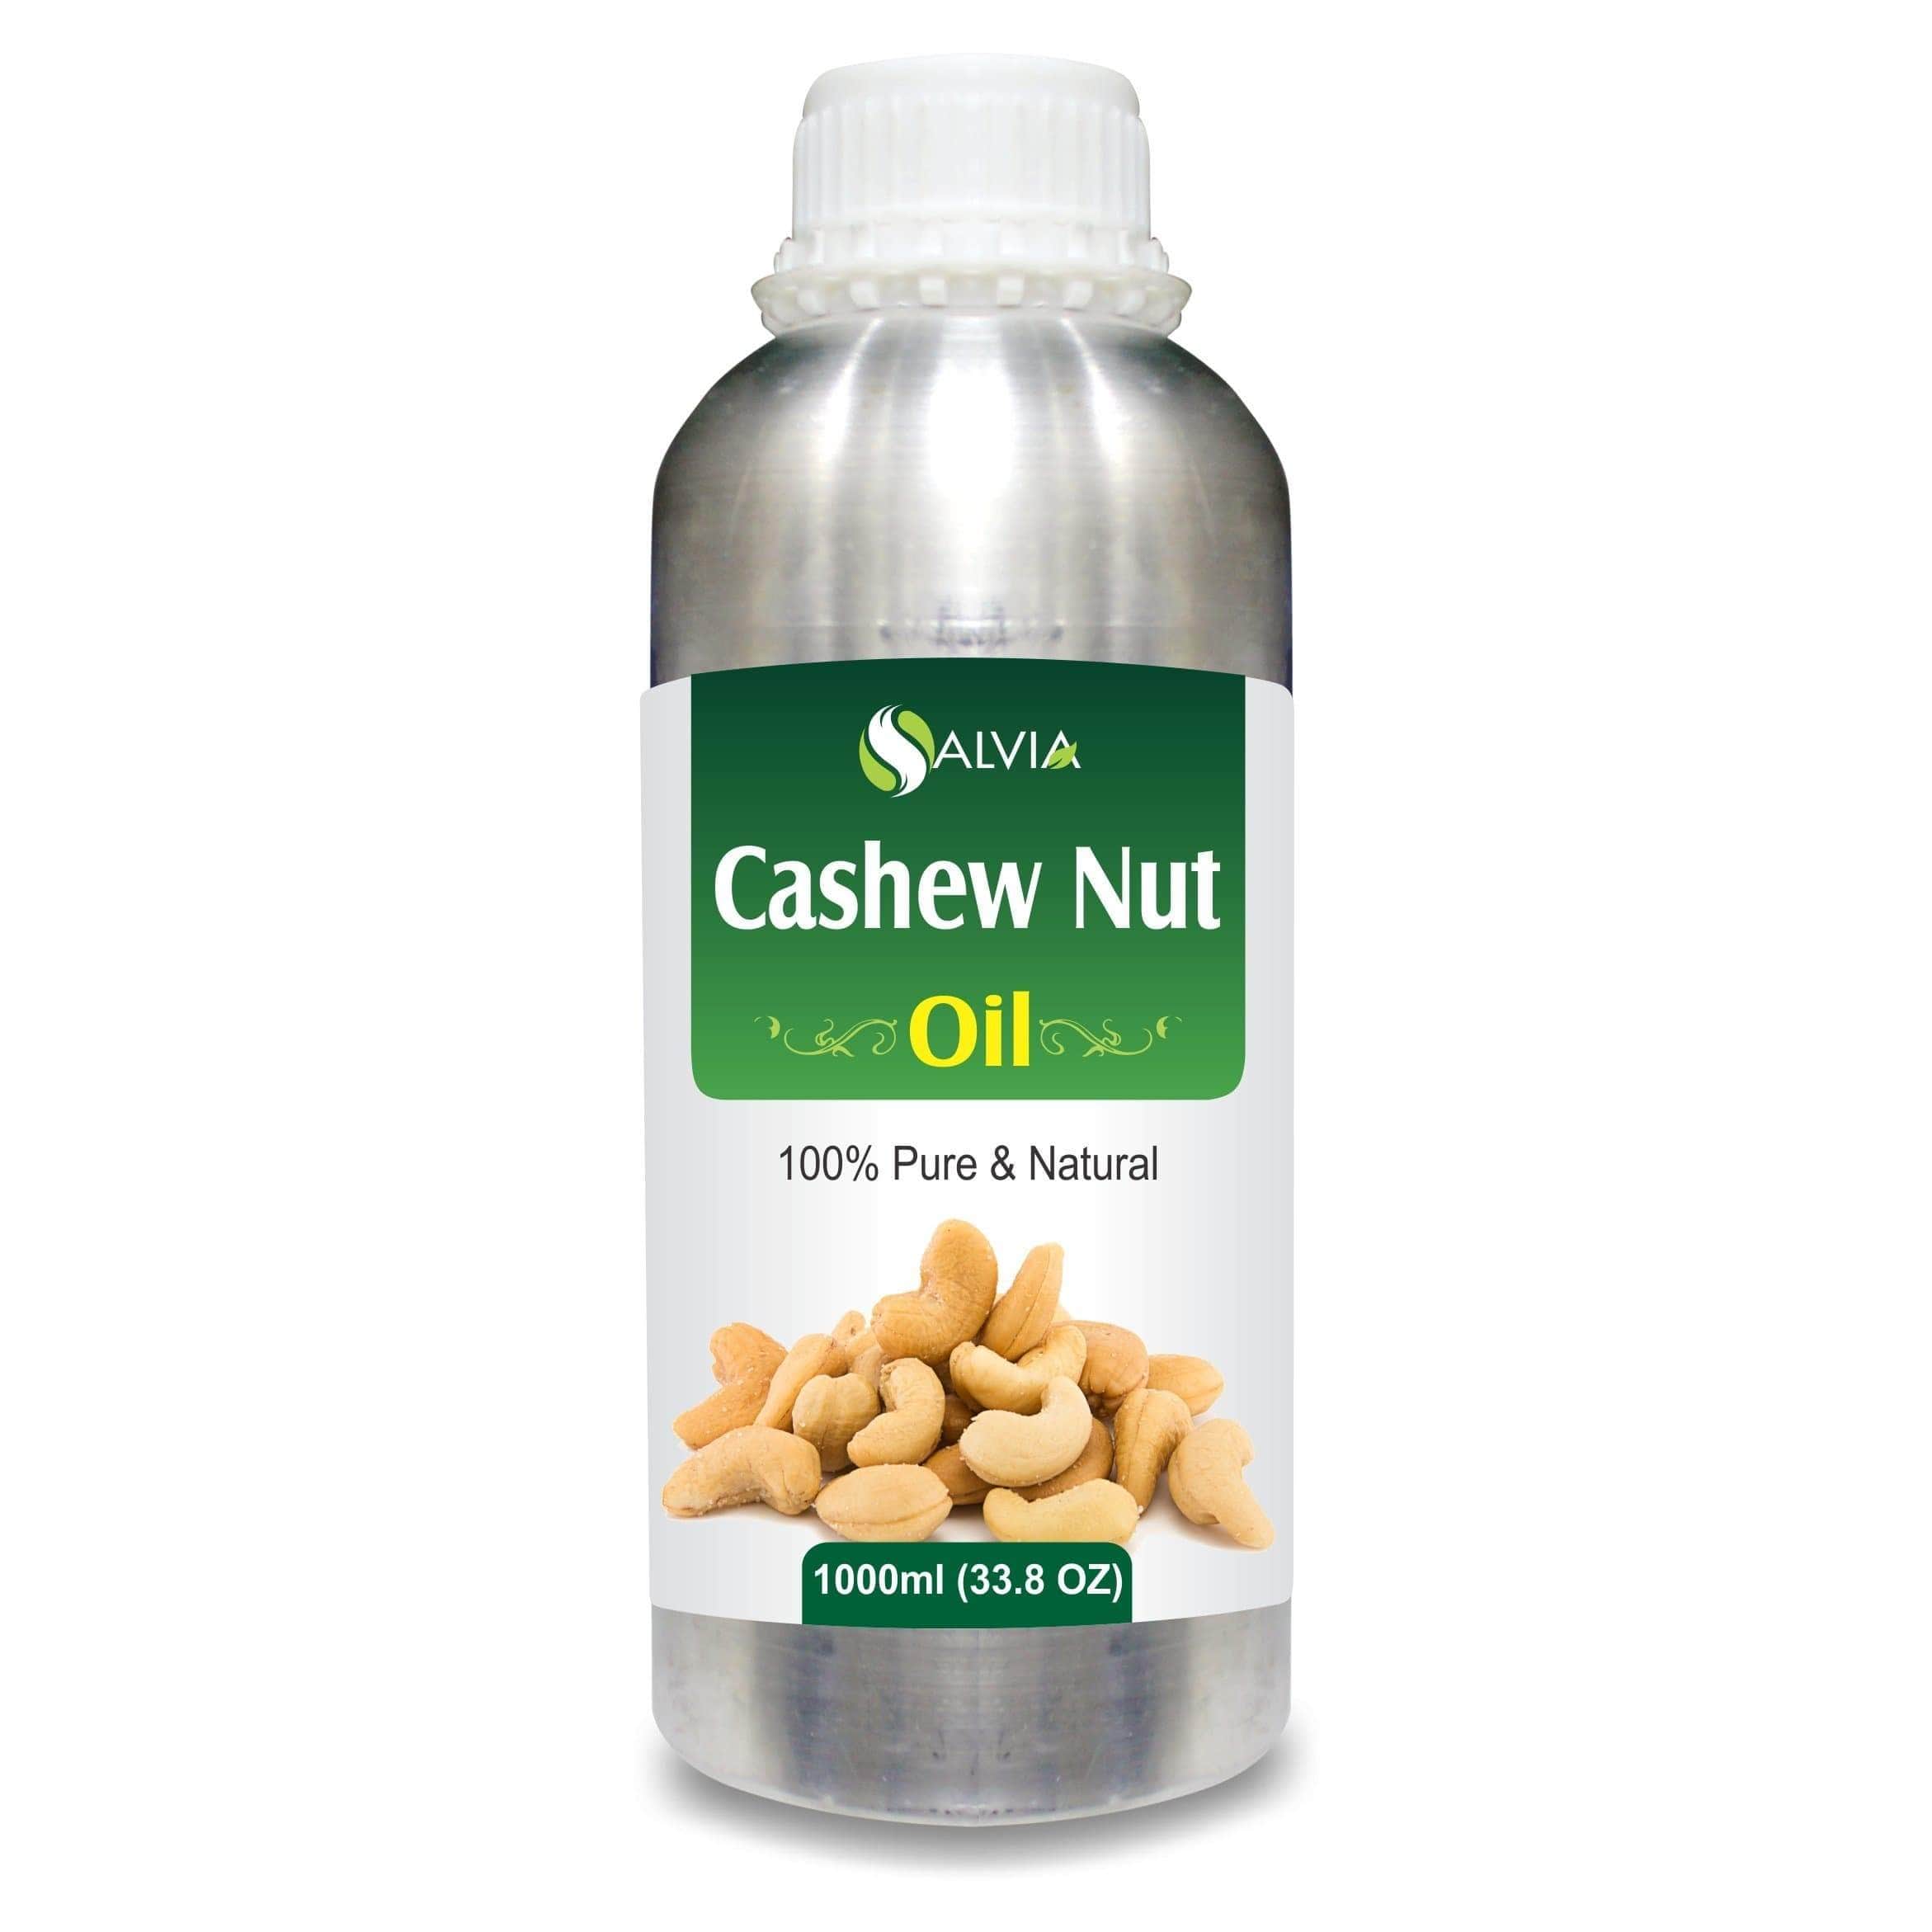 Cashew Nut Oil price